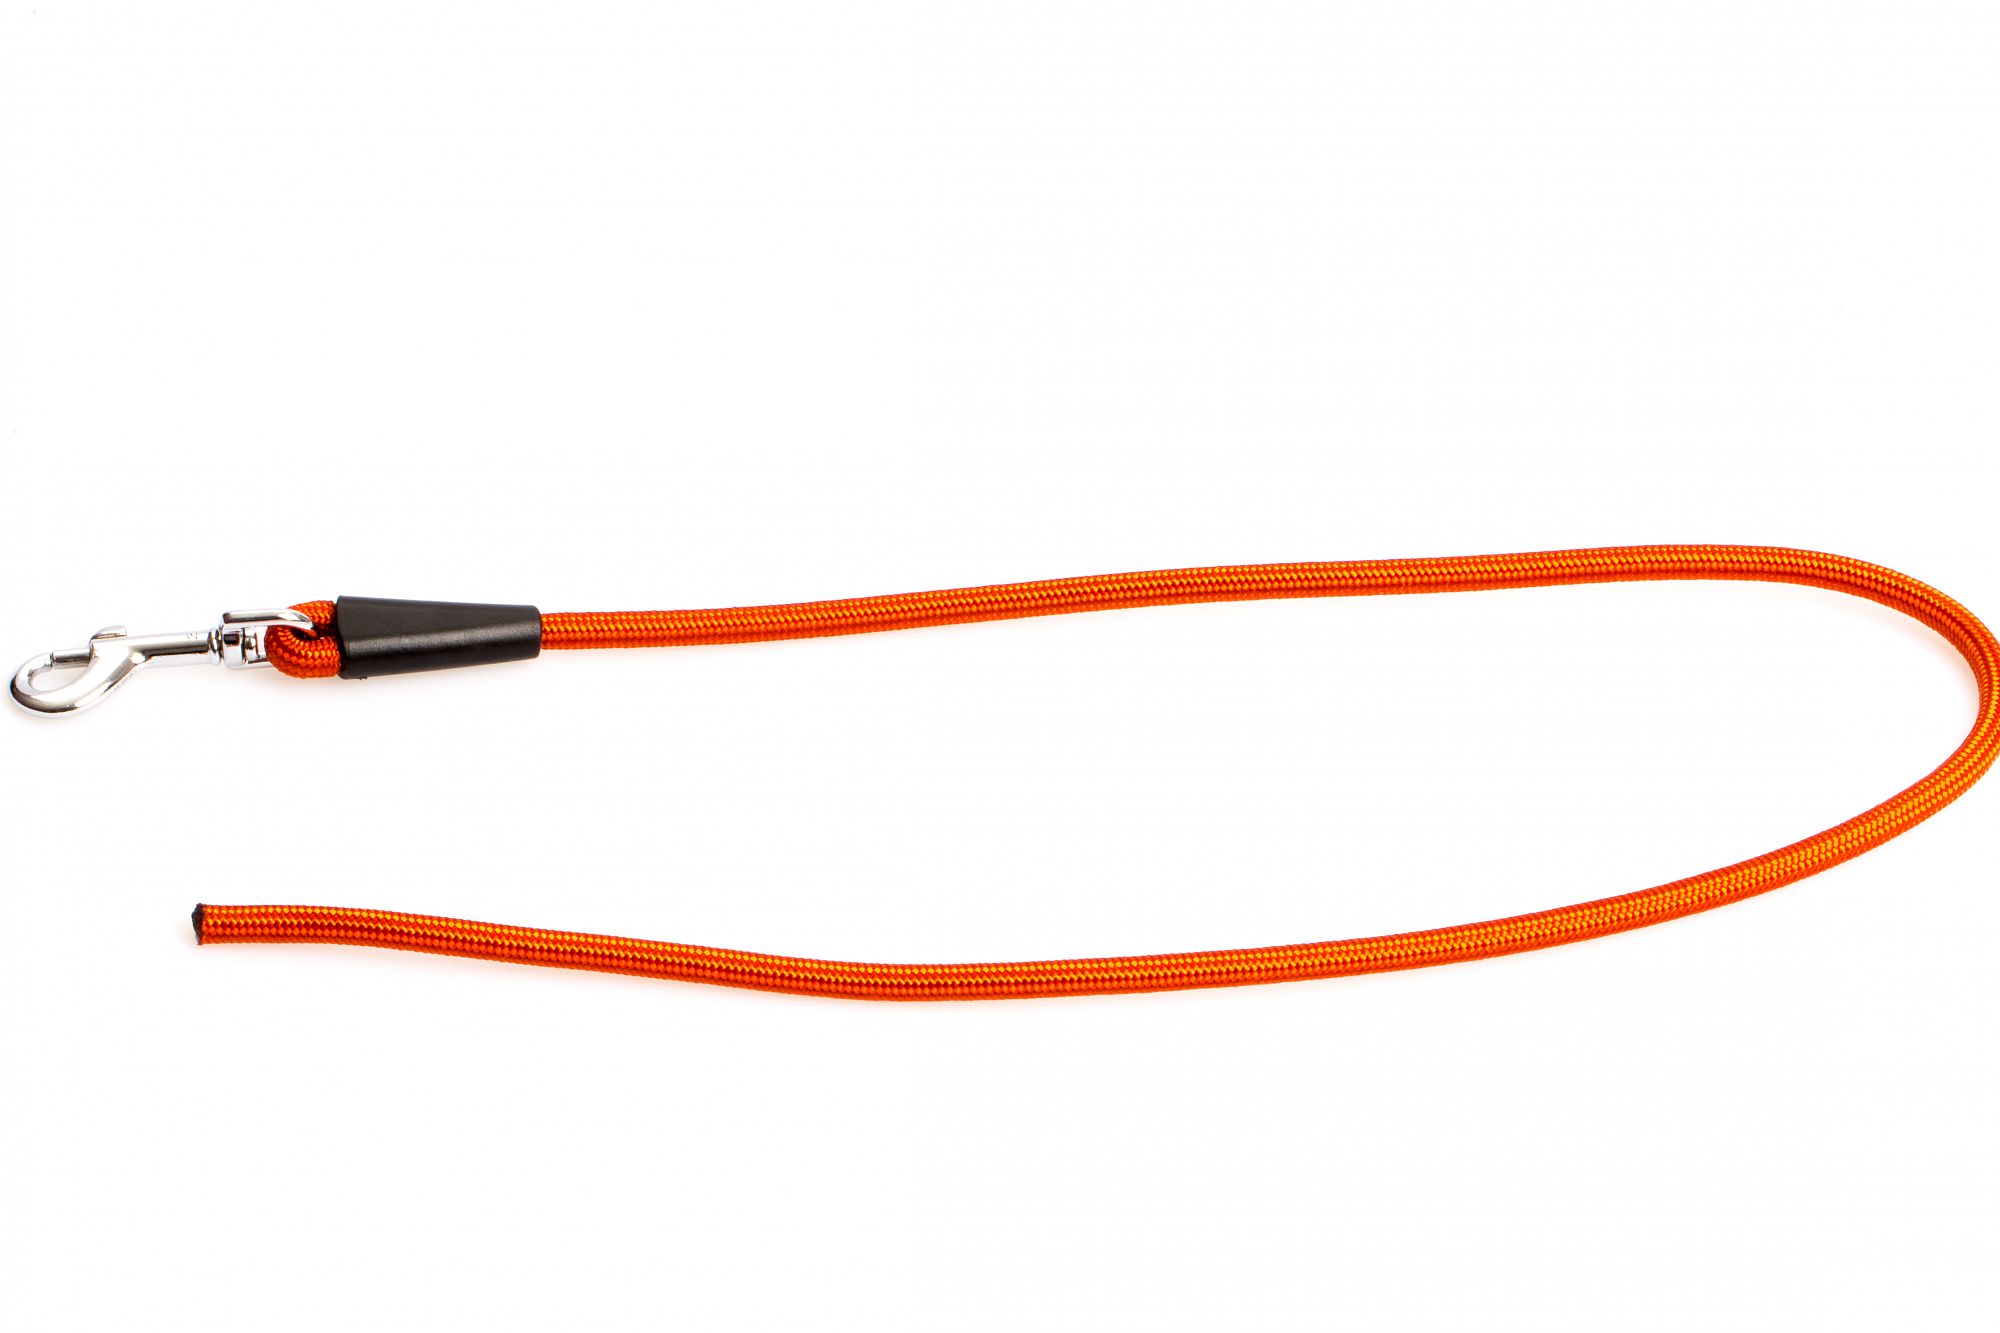 Vodítko couračka lano, polyamid, 2 barvy - Oranžová